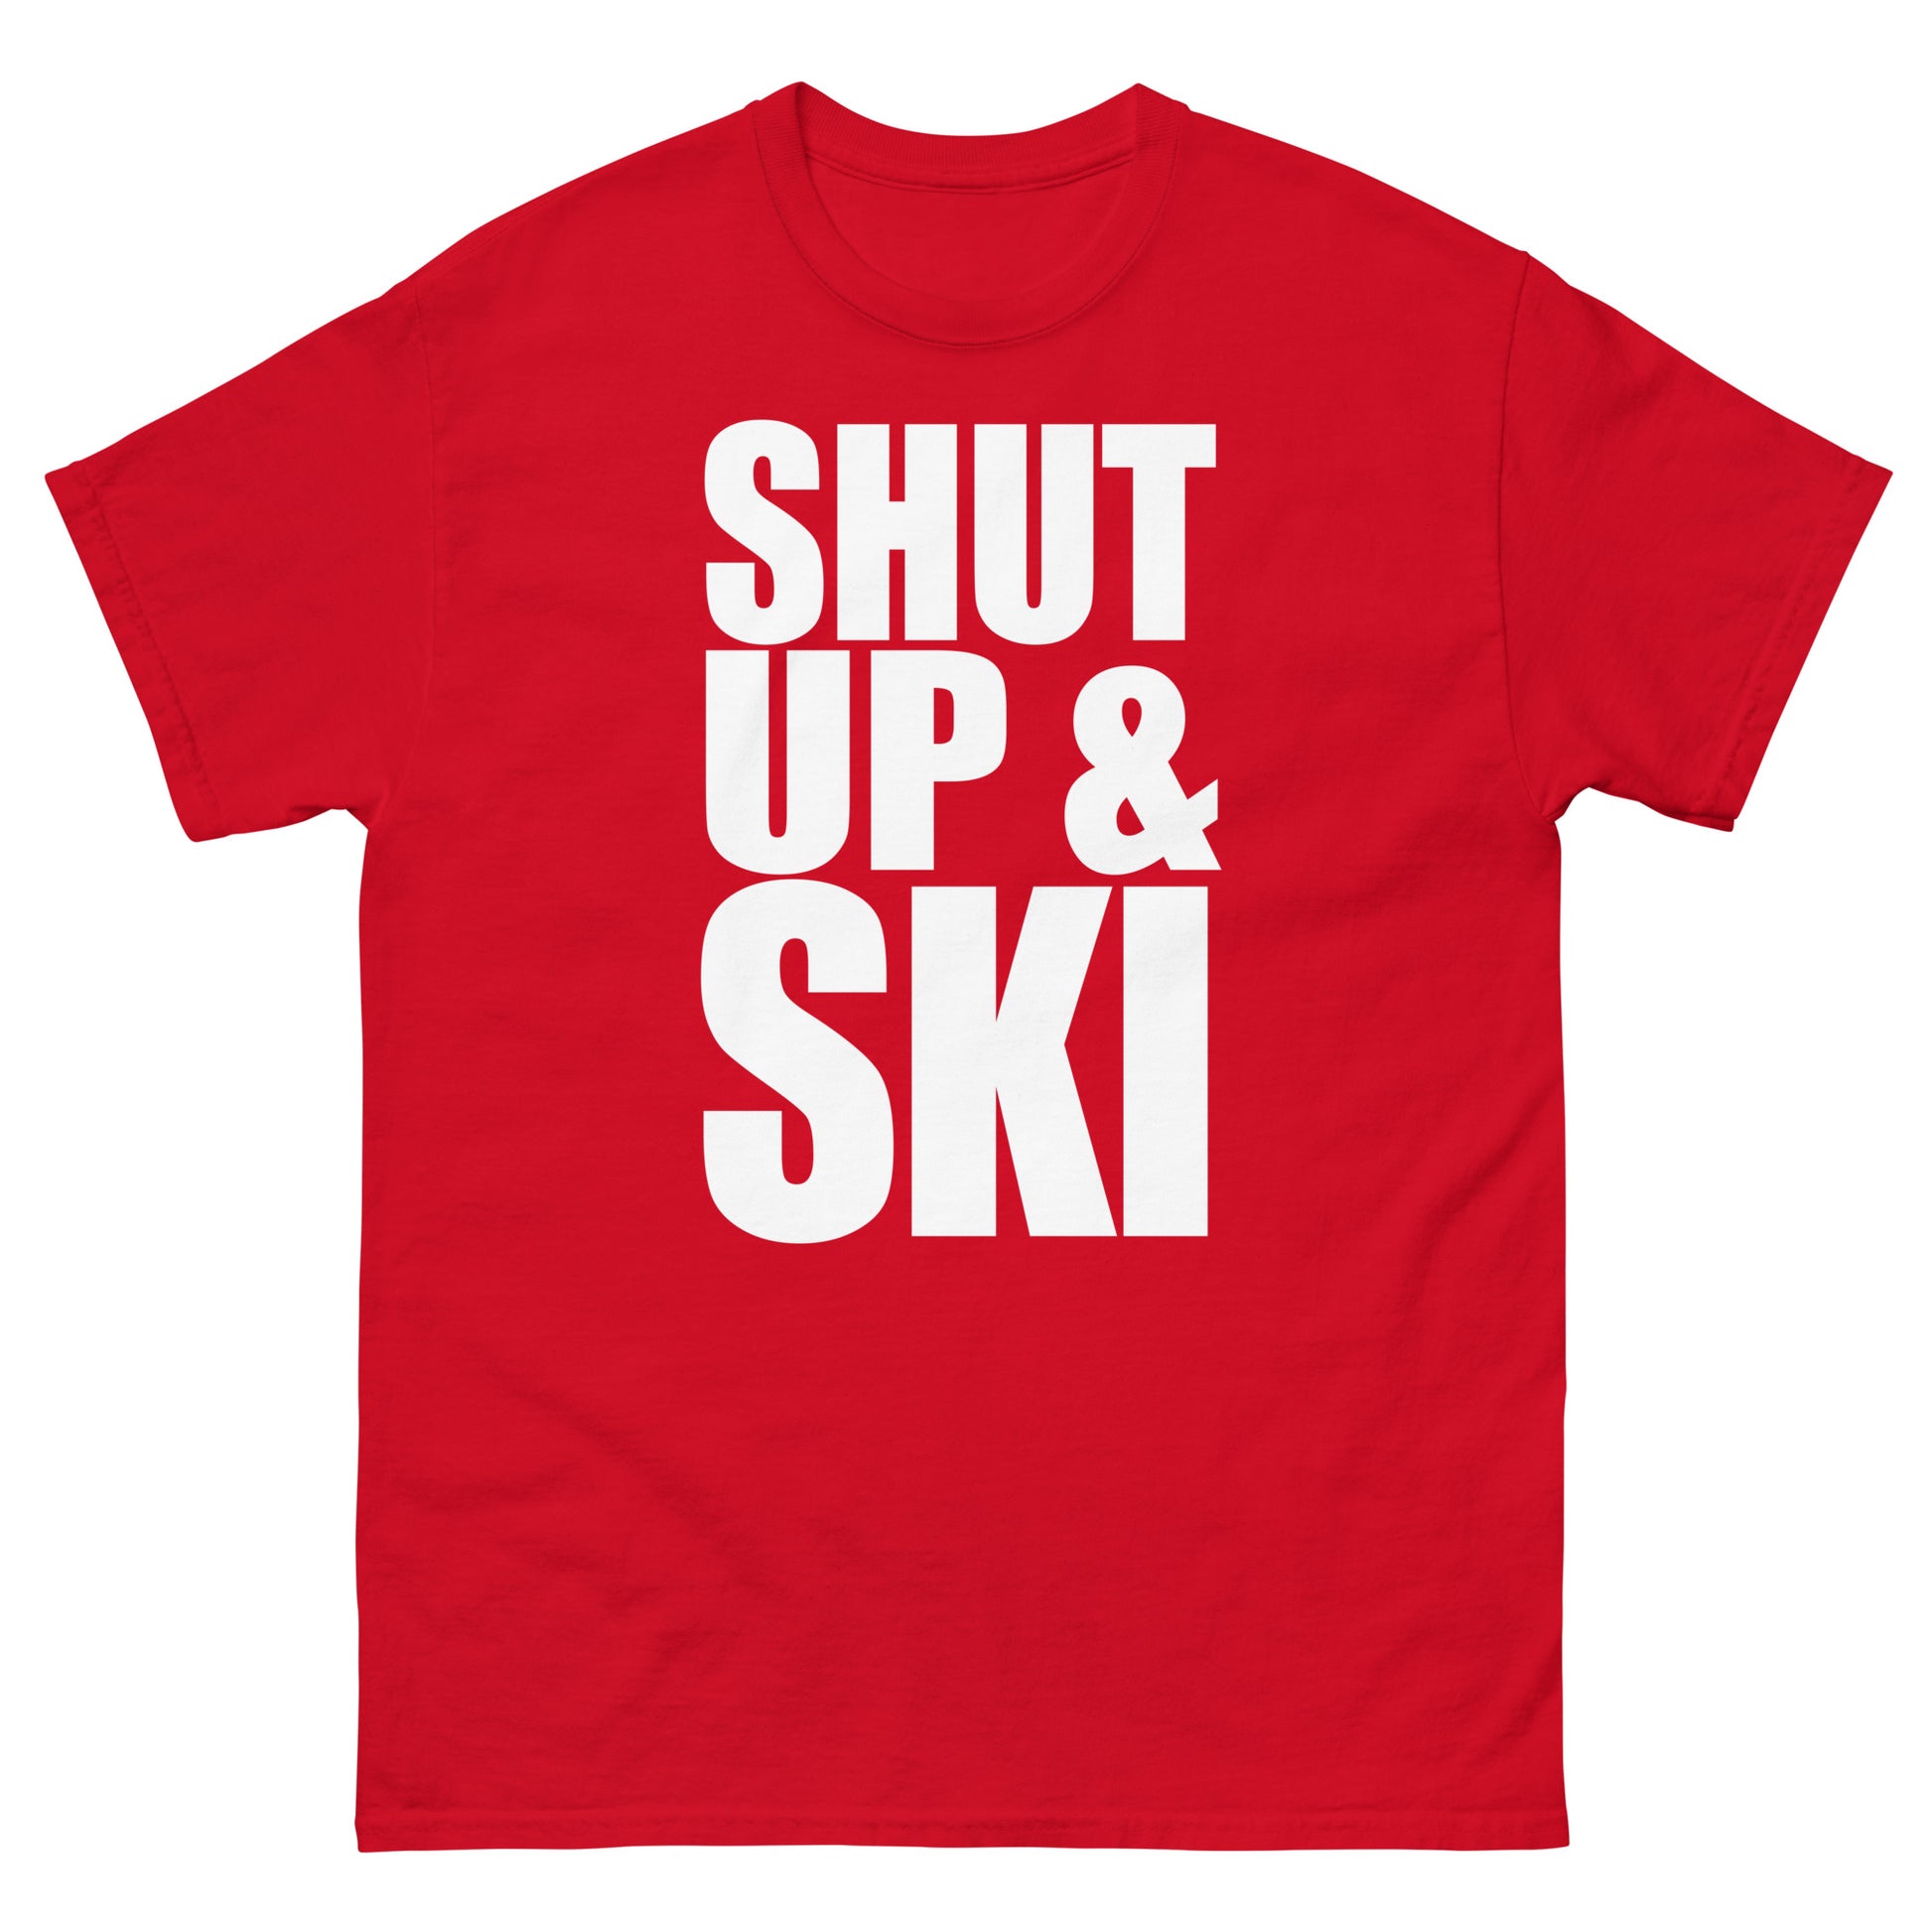 Shut up and ski printed t-shirt by Whistler shirts